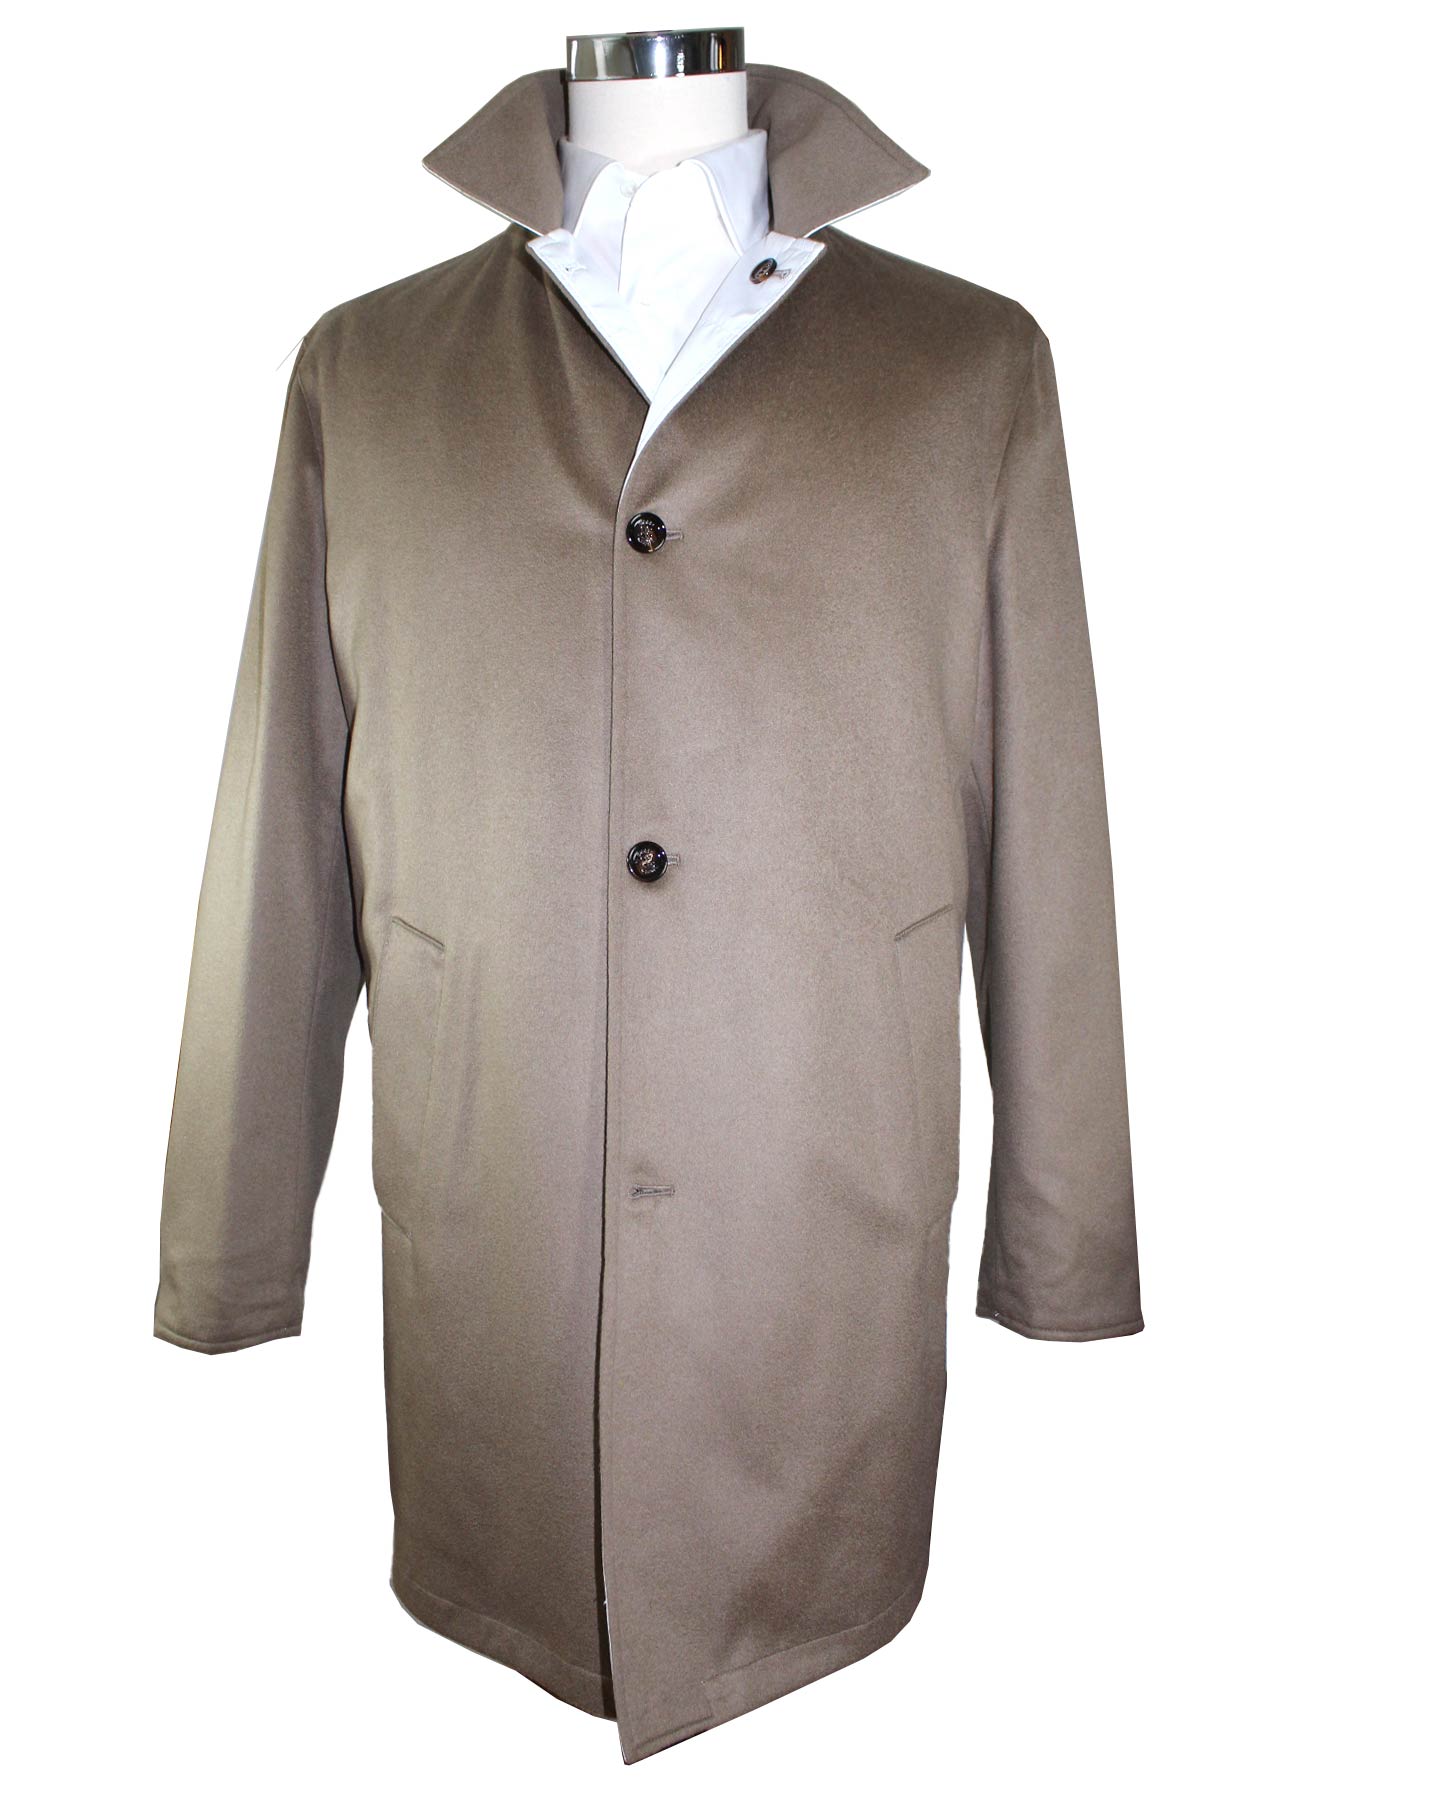 Kired Cashmere Coat Beige Reversible Overcoat